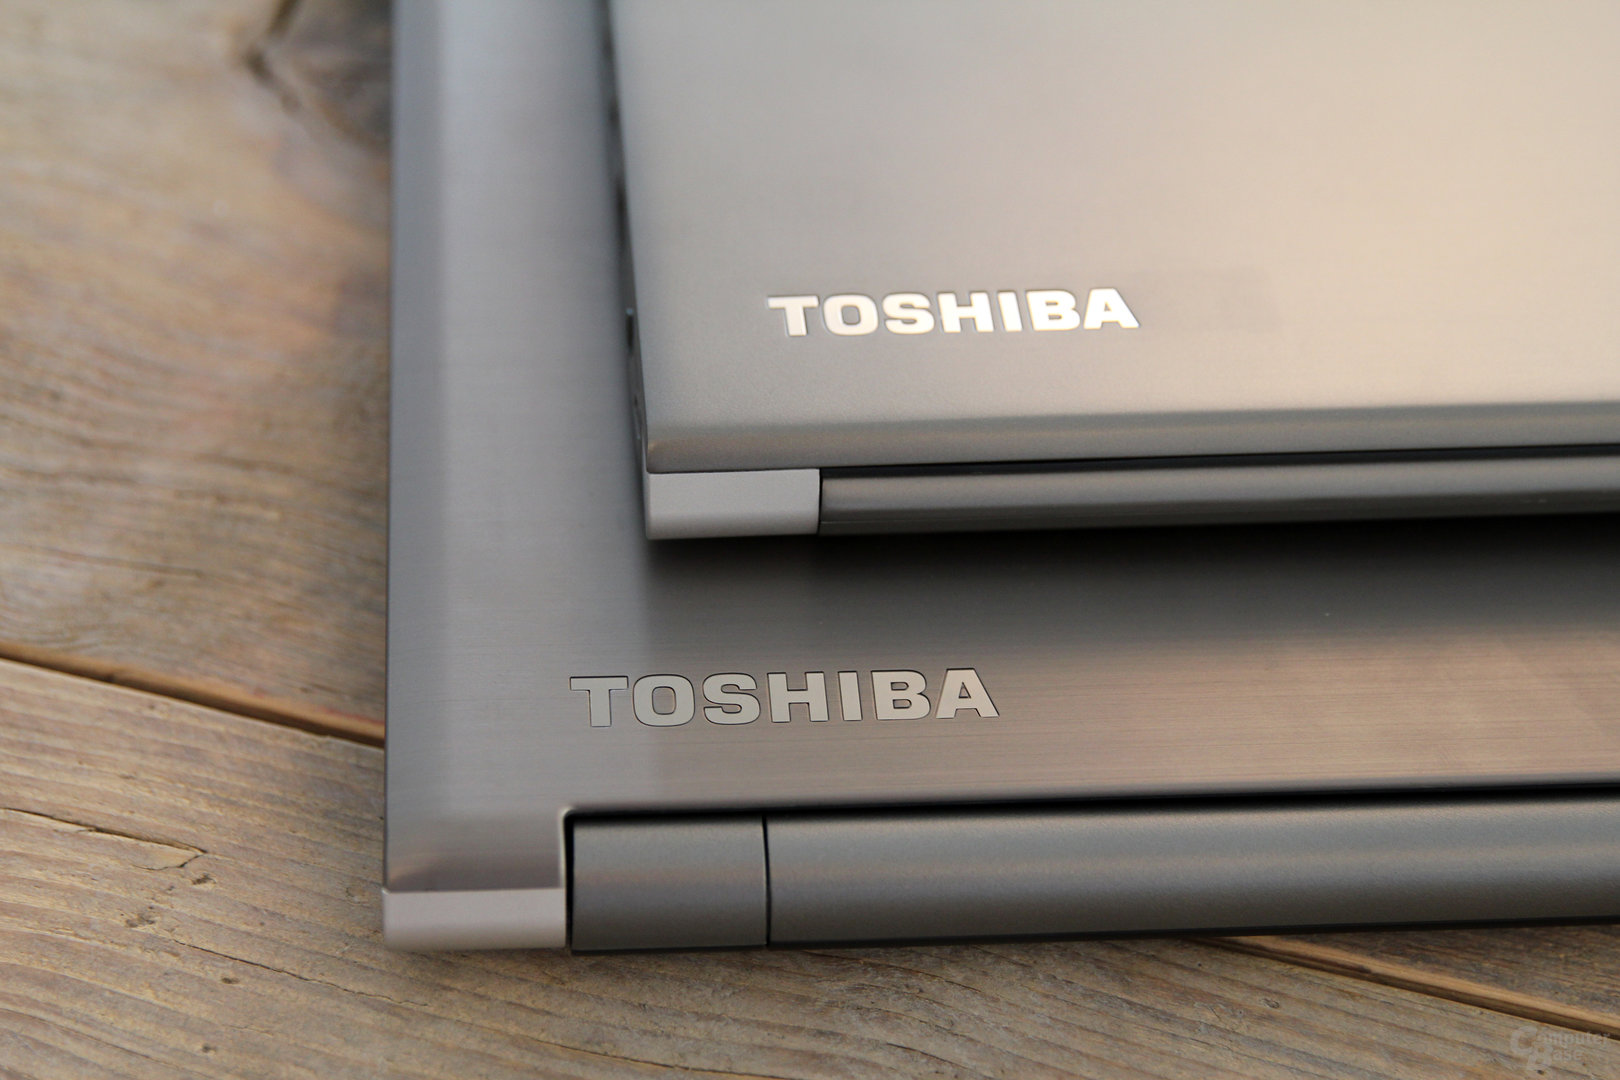 Toshiba Tecra Notebooks